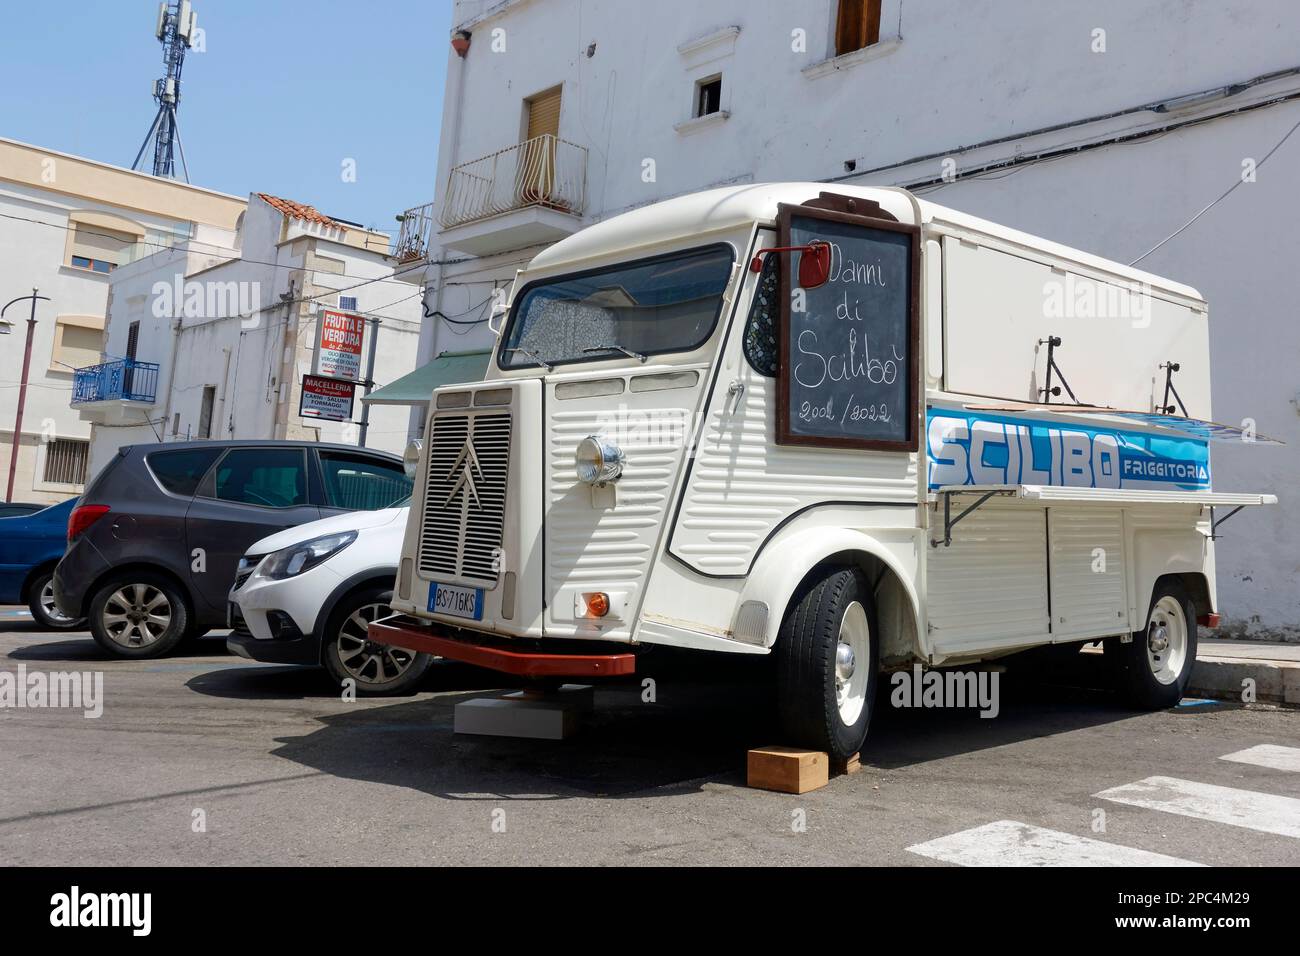 A Citroen van converted as a Friggitoria (seller of fried food). Peschici, Apulia (Puglia), Italy. Stock Photo